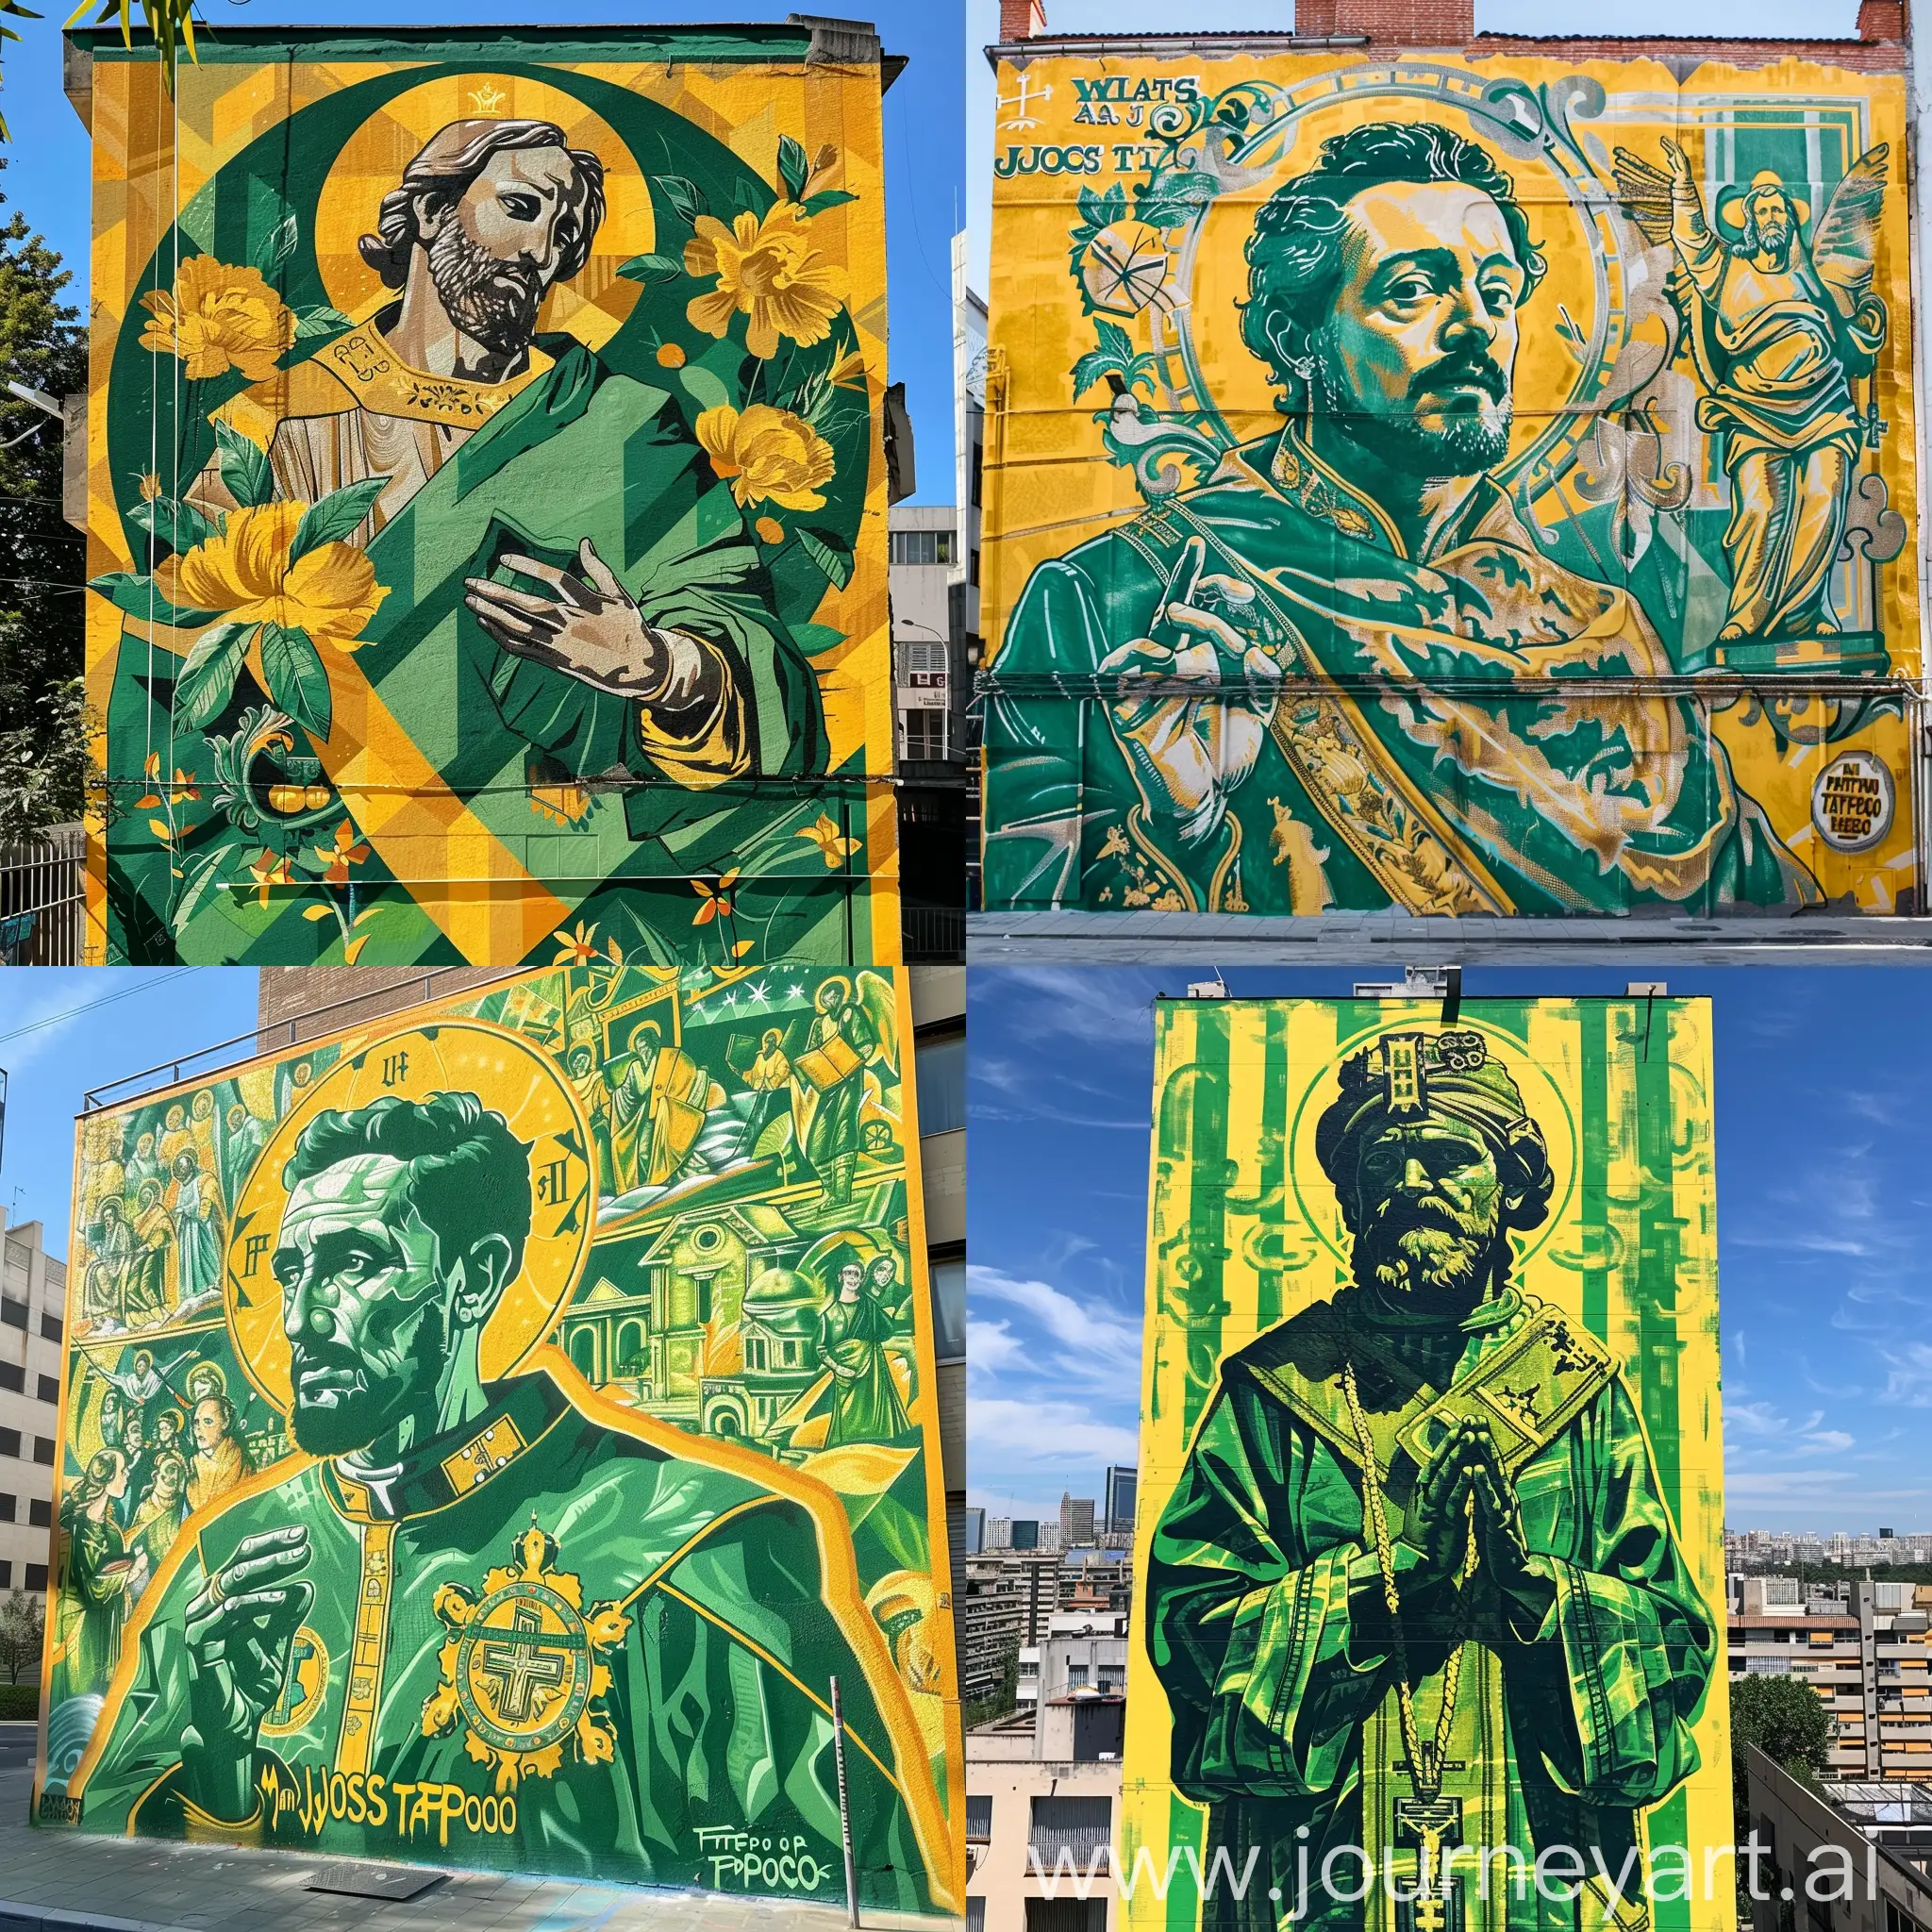 Urban-Mural-Depicting-the-Patron-Saint-of-San-Jose-Tateposco-in-Green-and-Yellow